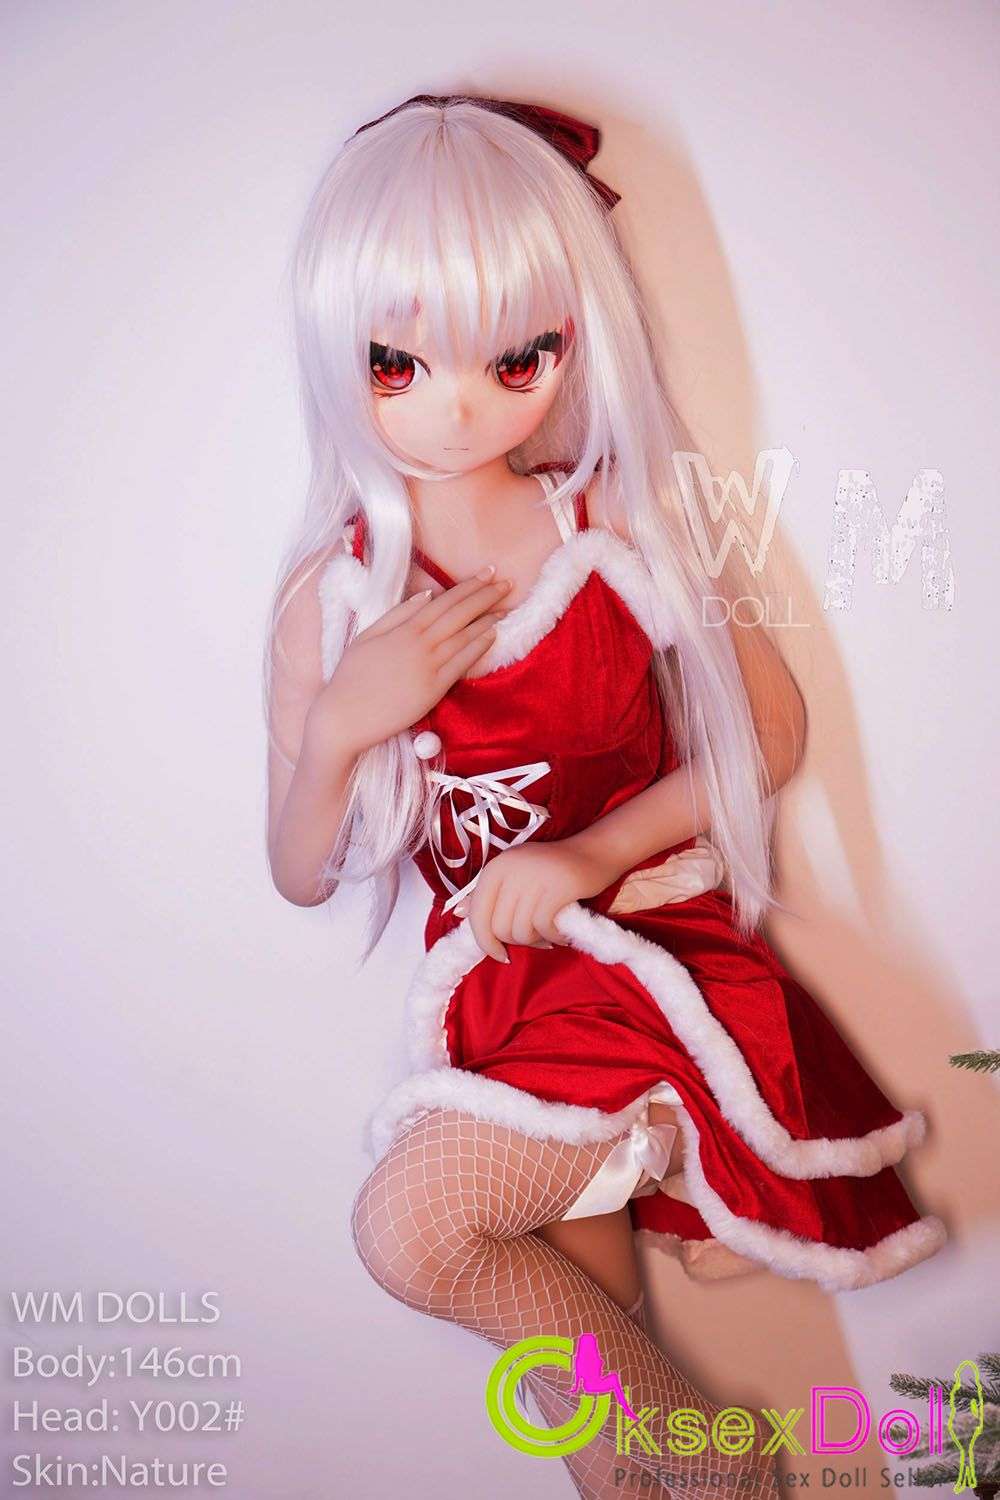 Anime sex doll image of Saory